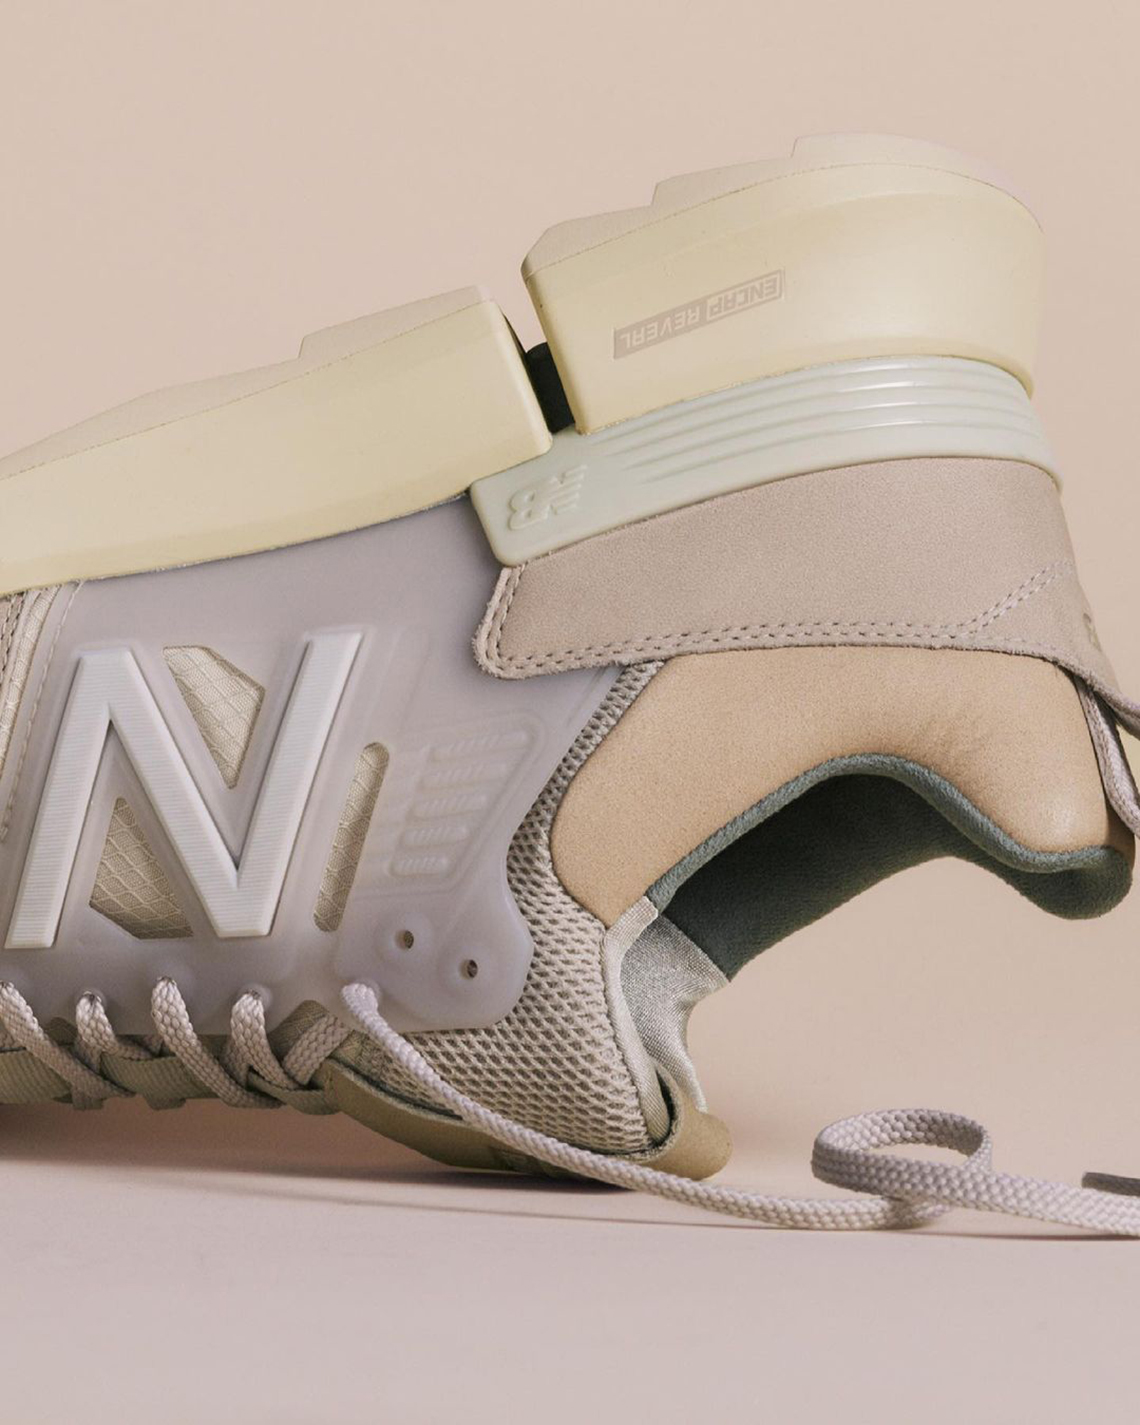 AURALEE New Balance R_C2 2021 Release Date | SneakerNews.com